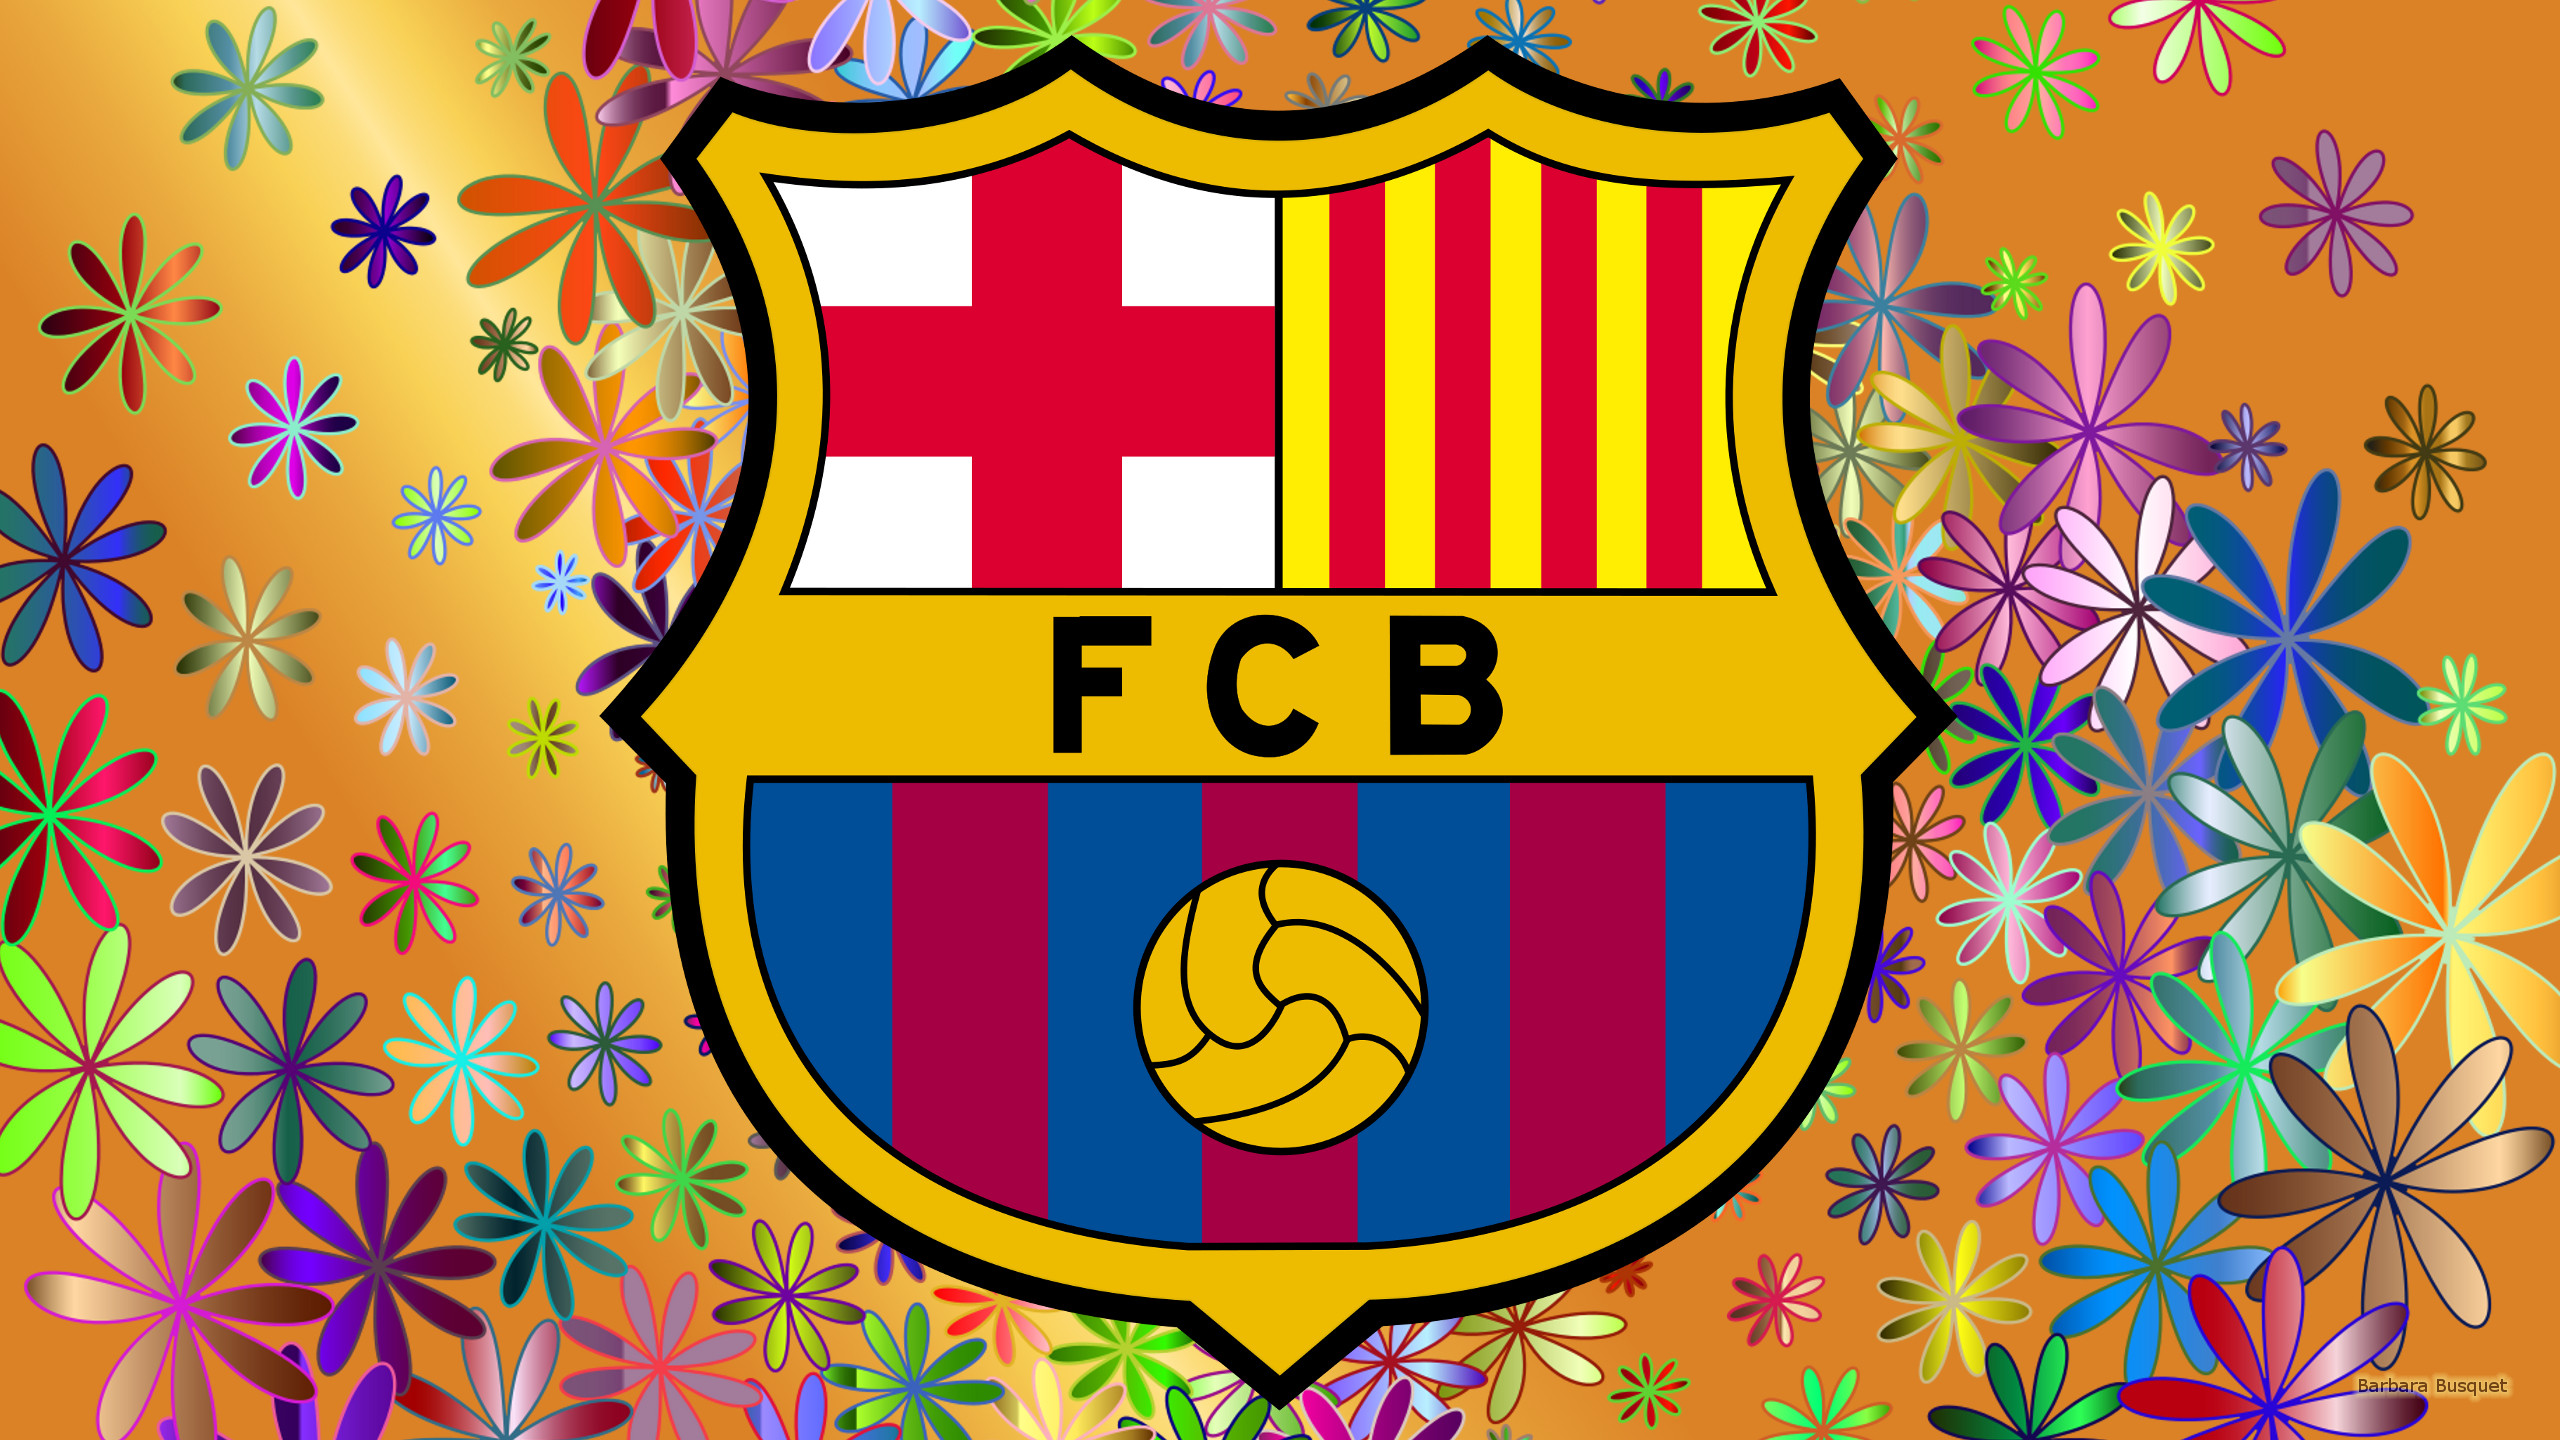 Герб ФК Барселона